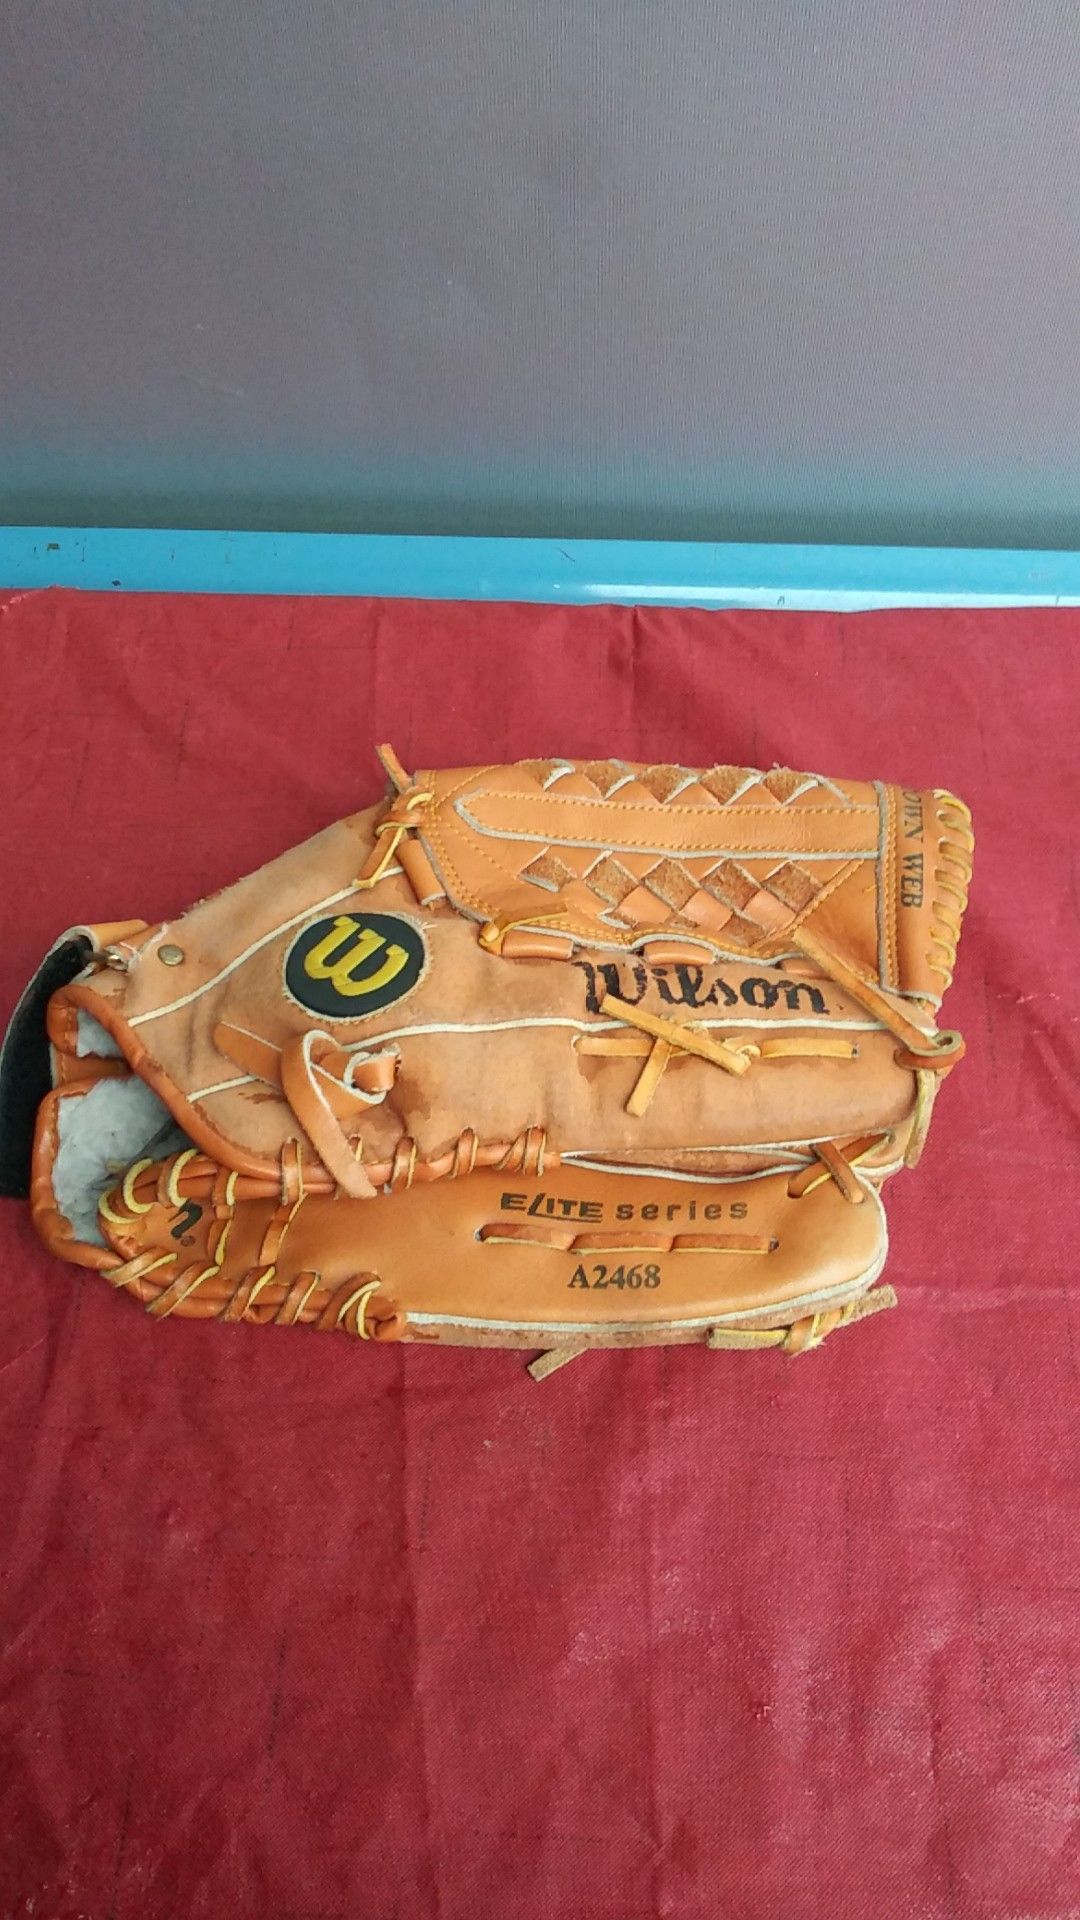 Wilson Elite series baseball glove